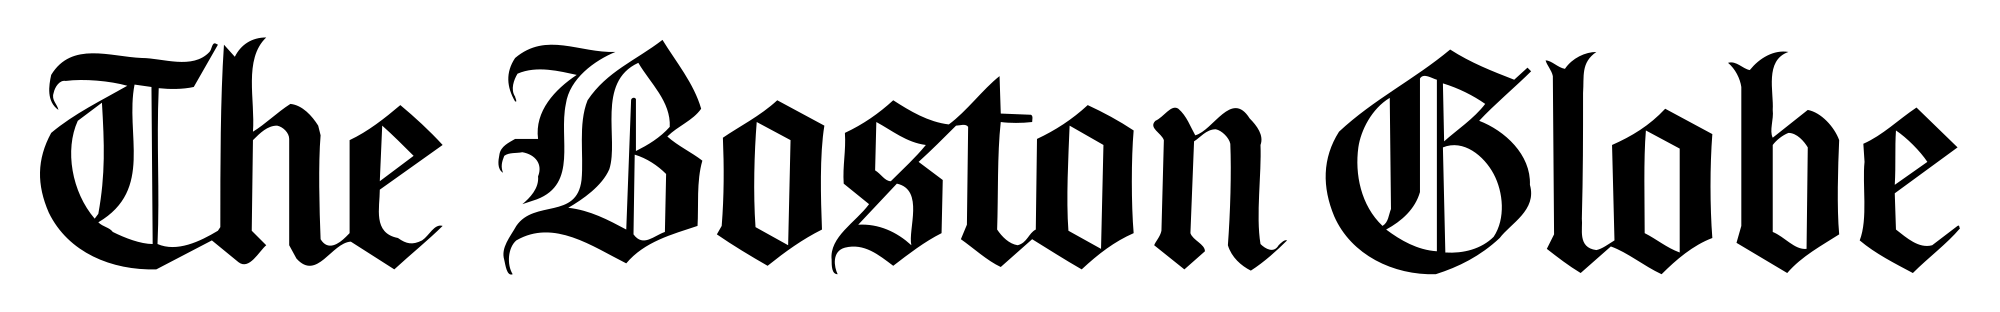 Boston Globe Logo - File:The Boston Globe.svg - Wikimedia Commons